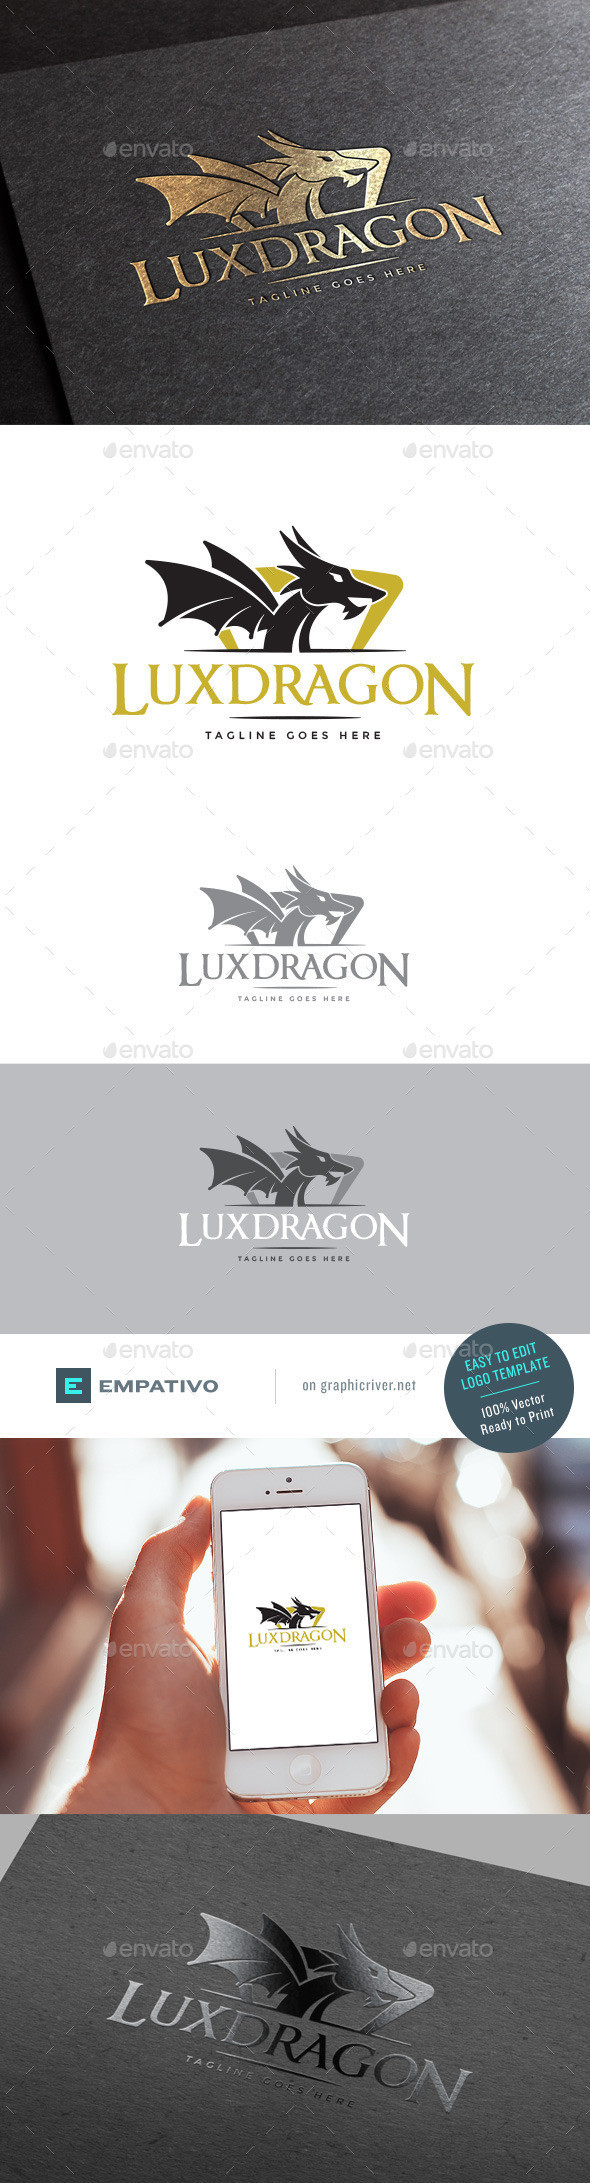 Luxdragon logo template